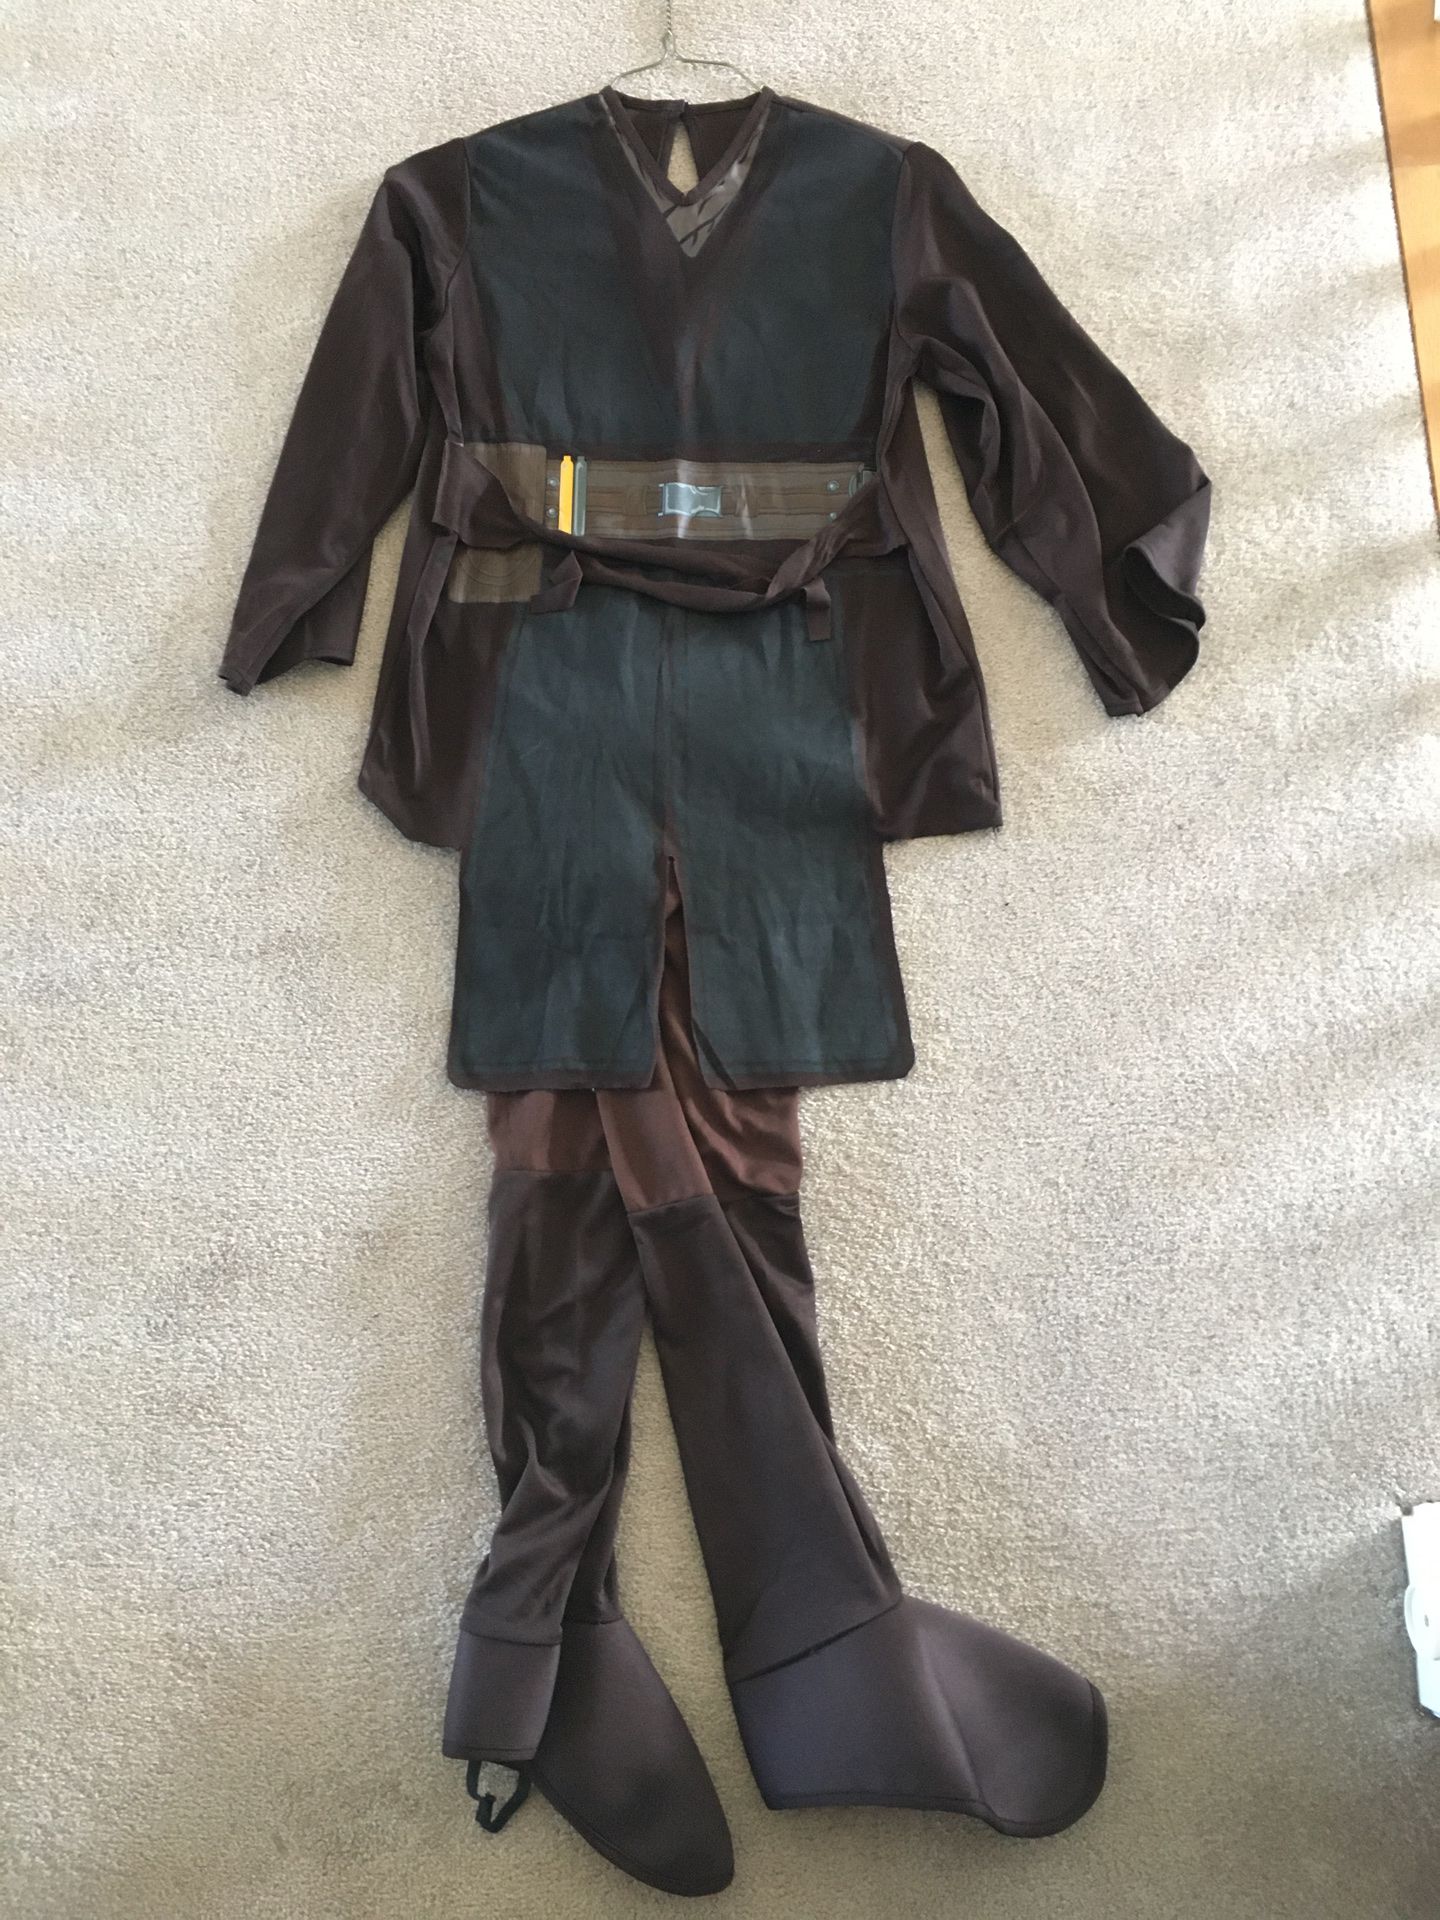 Star Wars - Anakin Skywalker Halloween costume